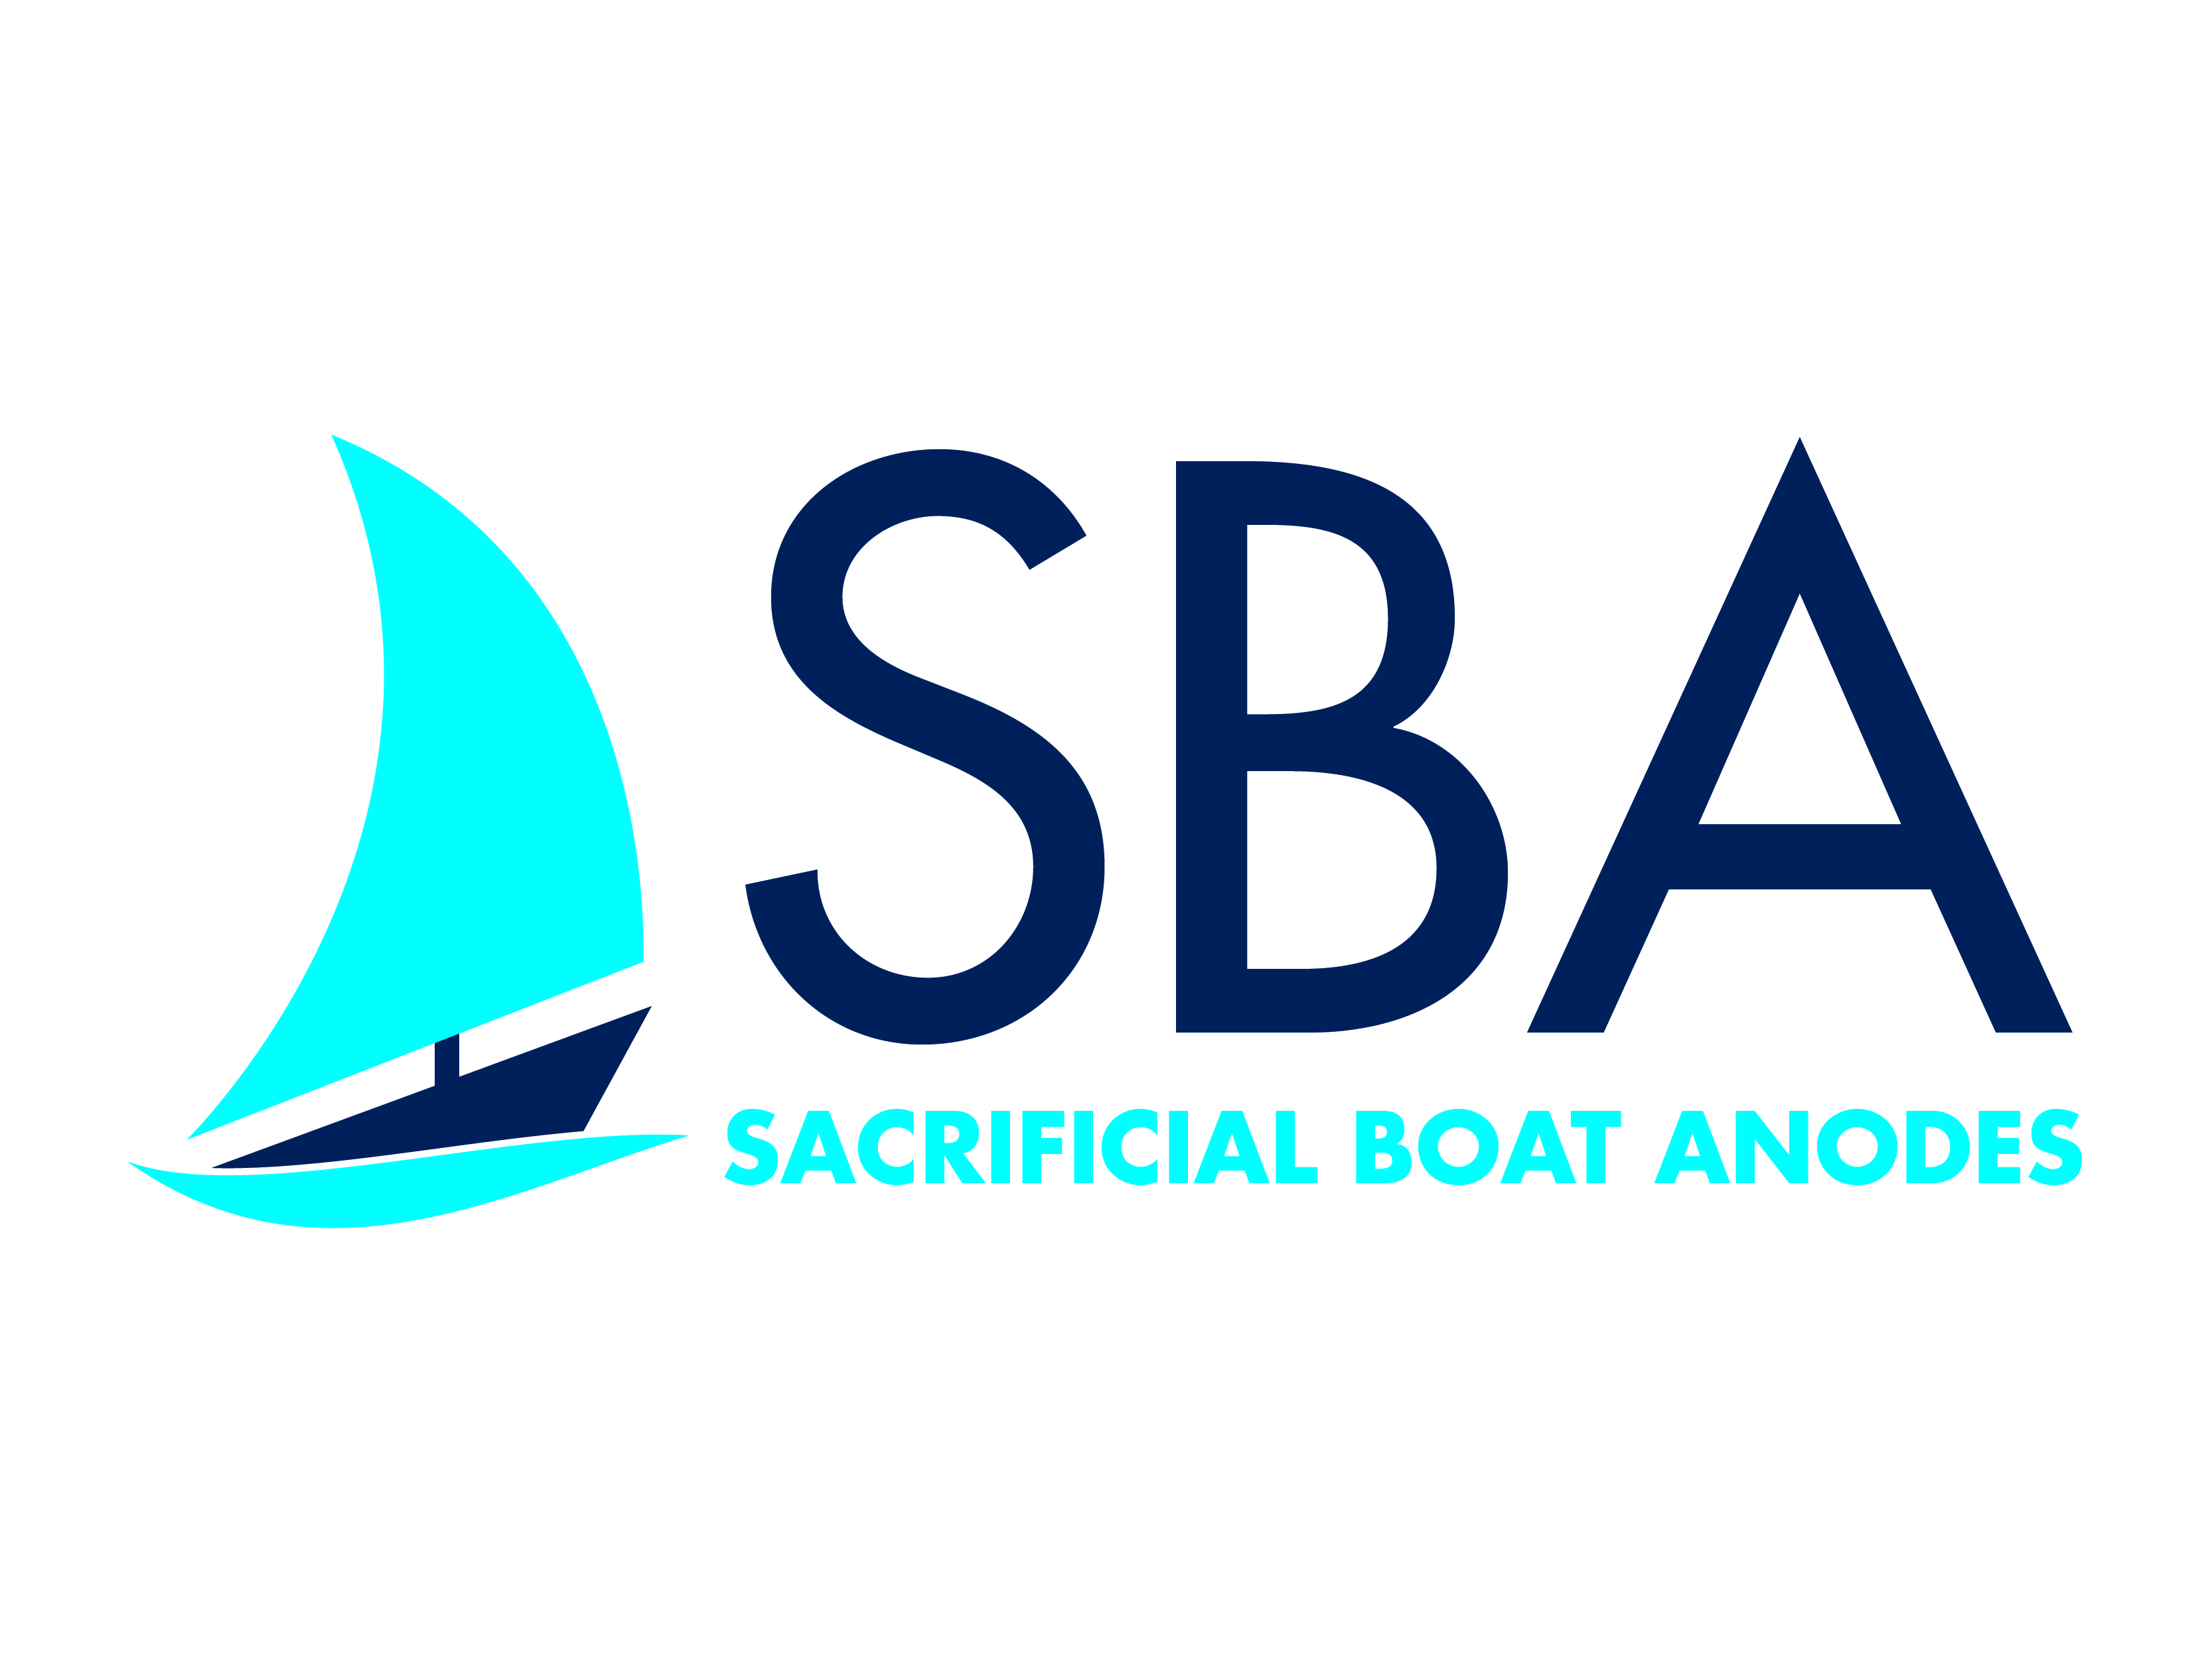 Sacrificial Boat Anodes Ltd